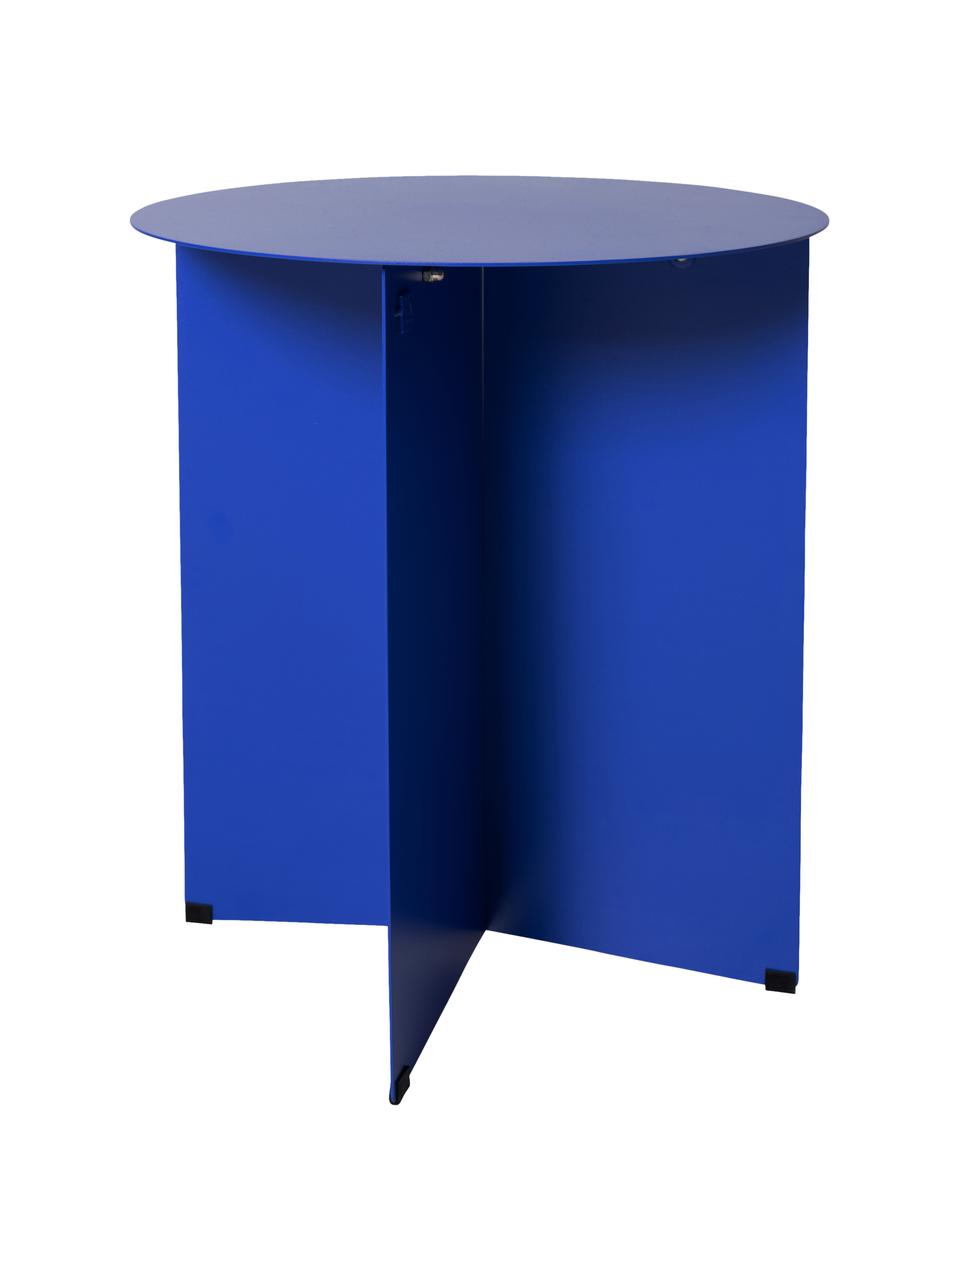 Runder Metall-Beistelltisch Dinga in Blau, Metall, beschichtet, Blau, Ø 40 x H 45 cm